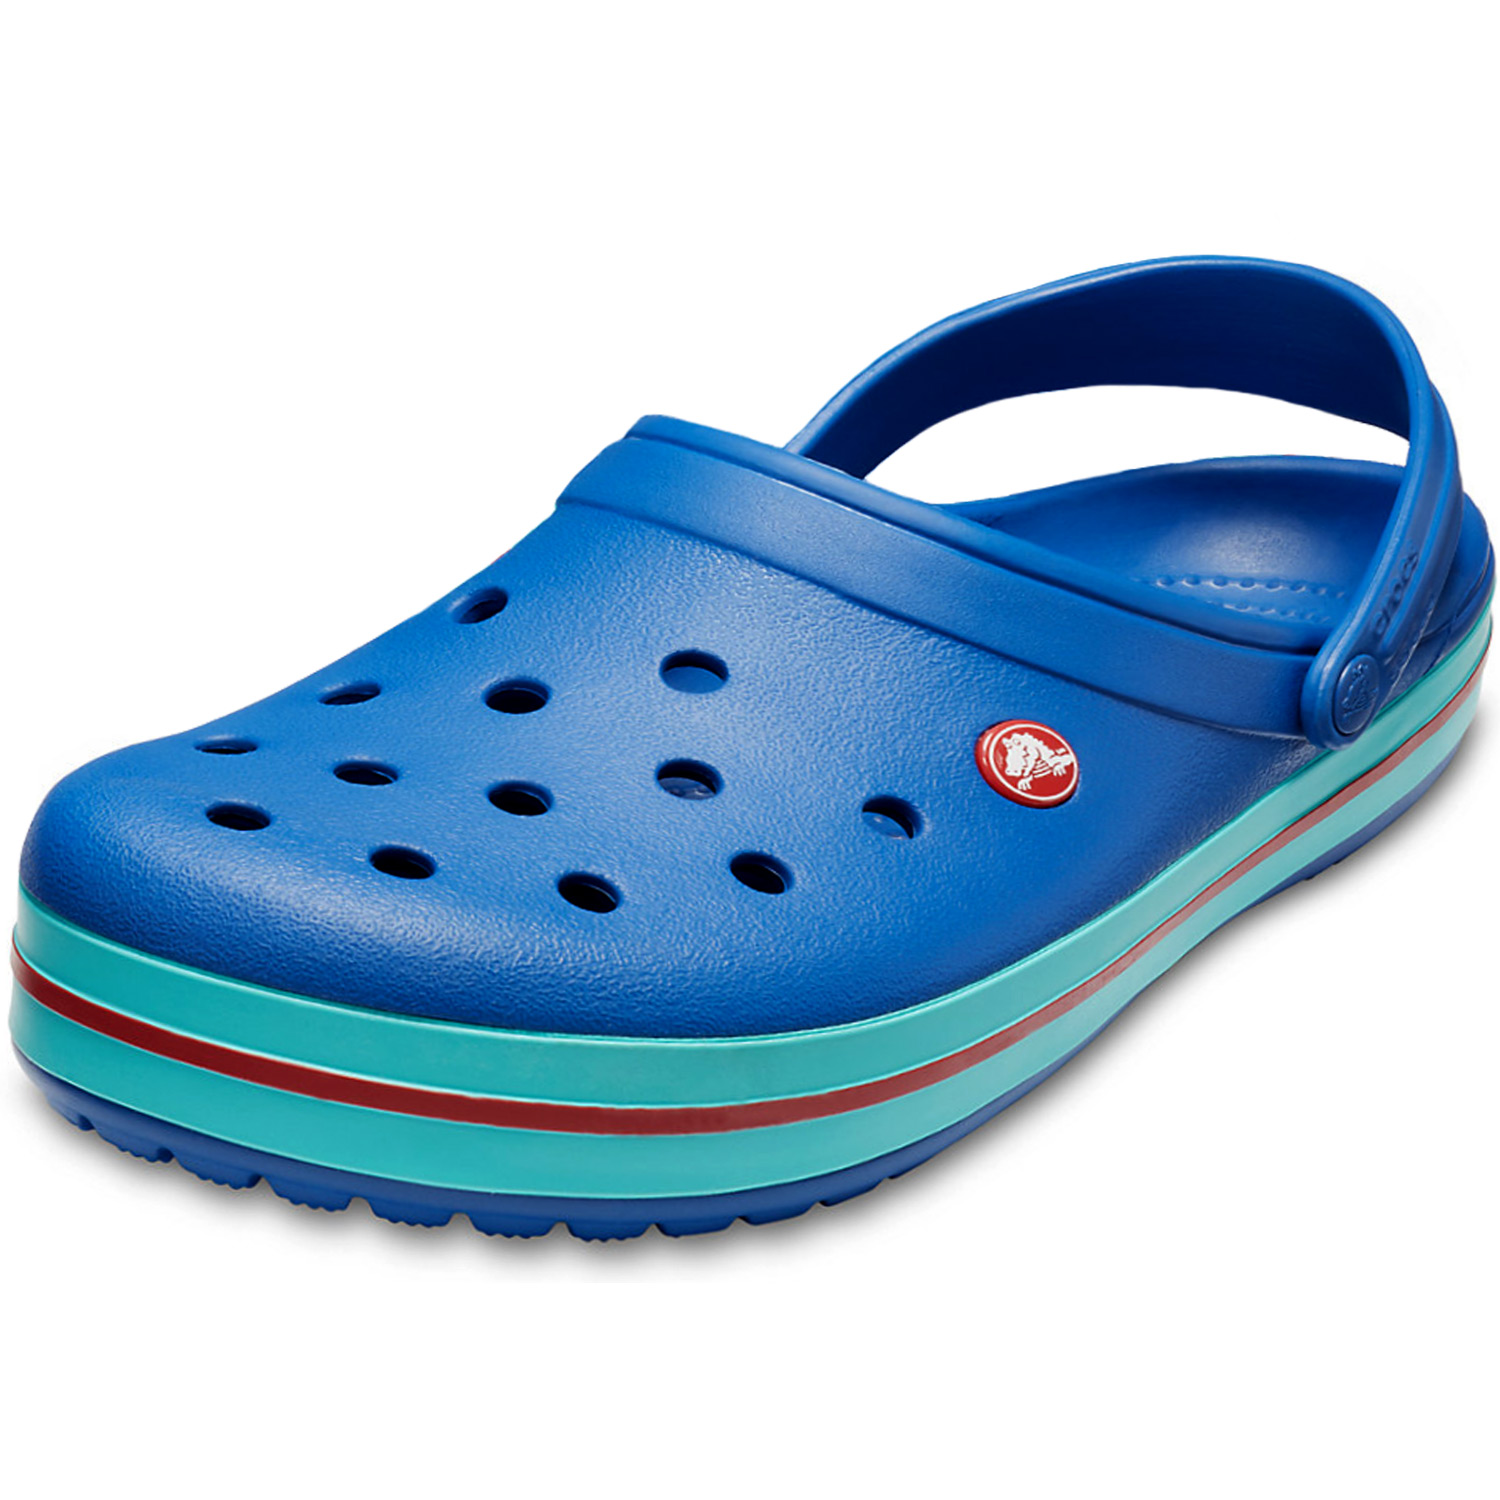 show me a picture of crocs shoes Online 